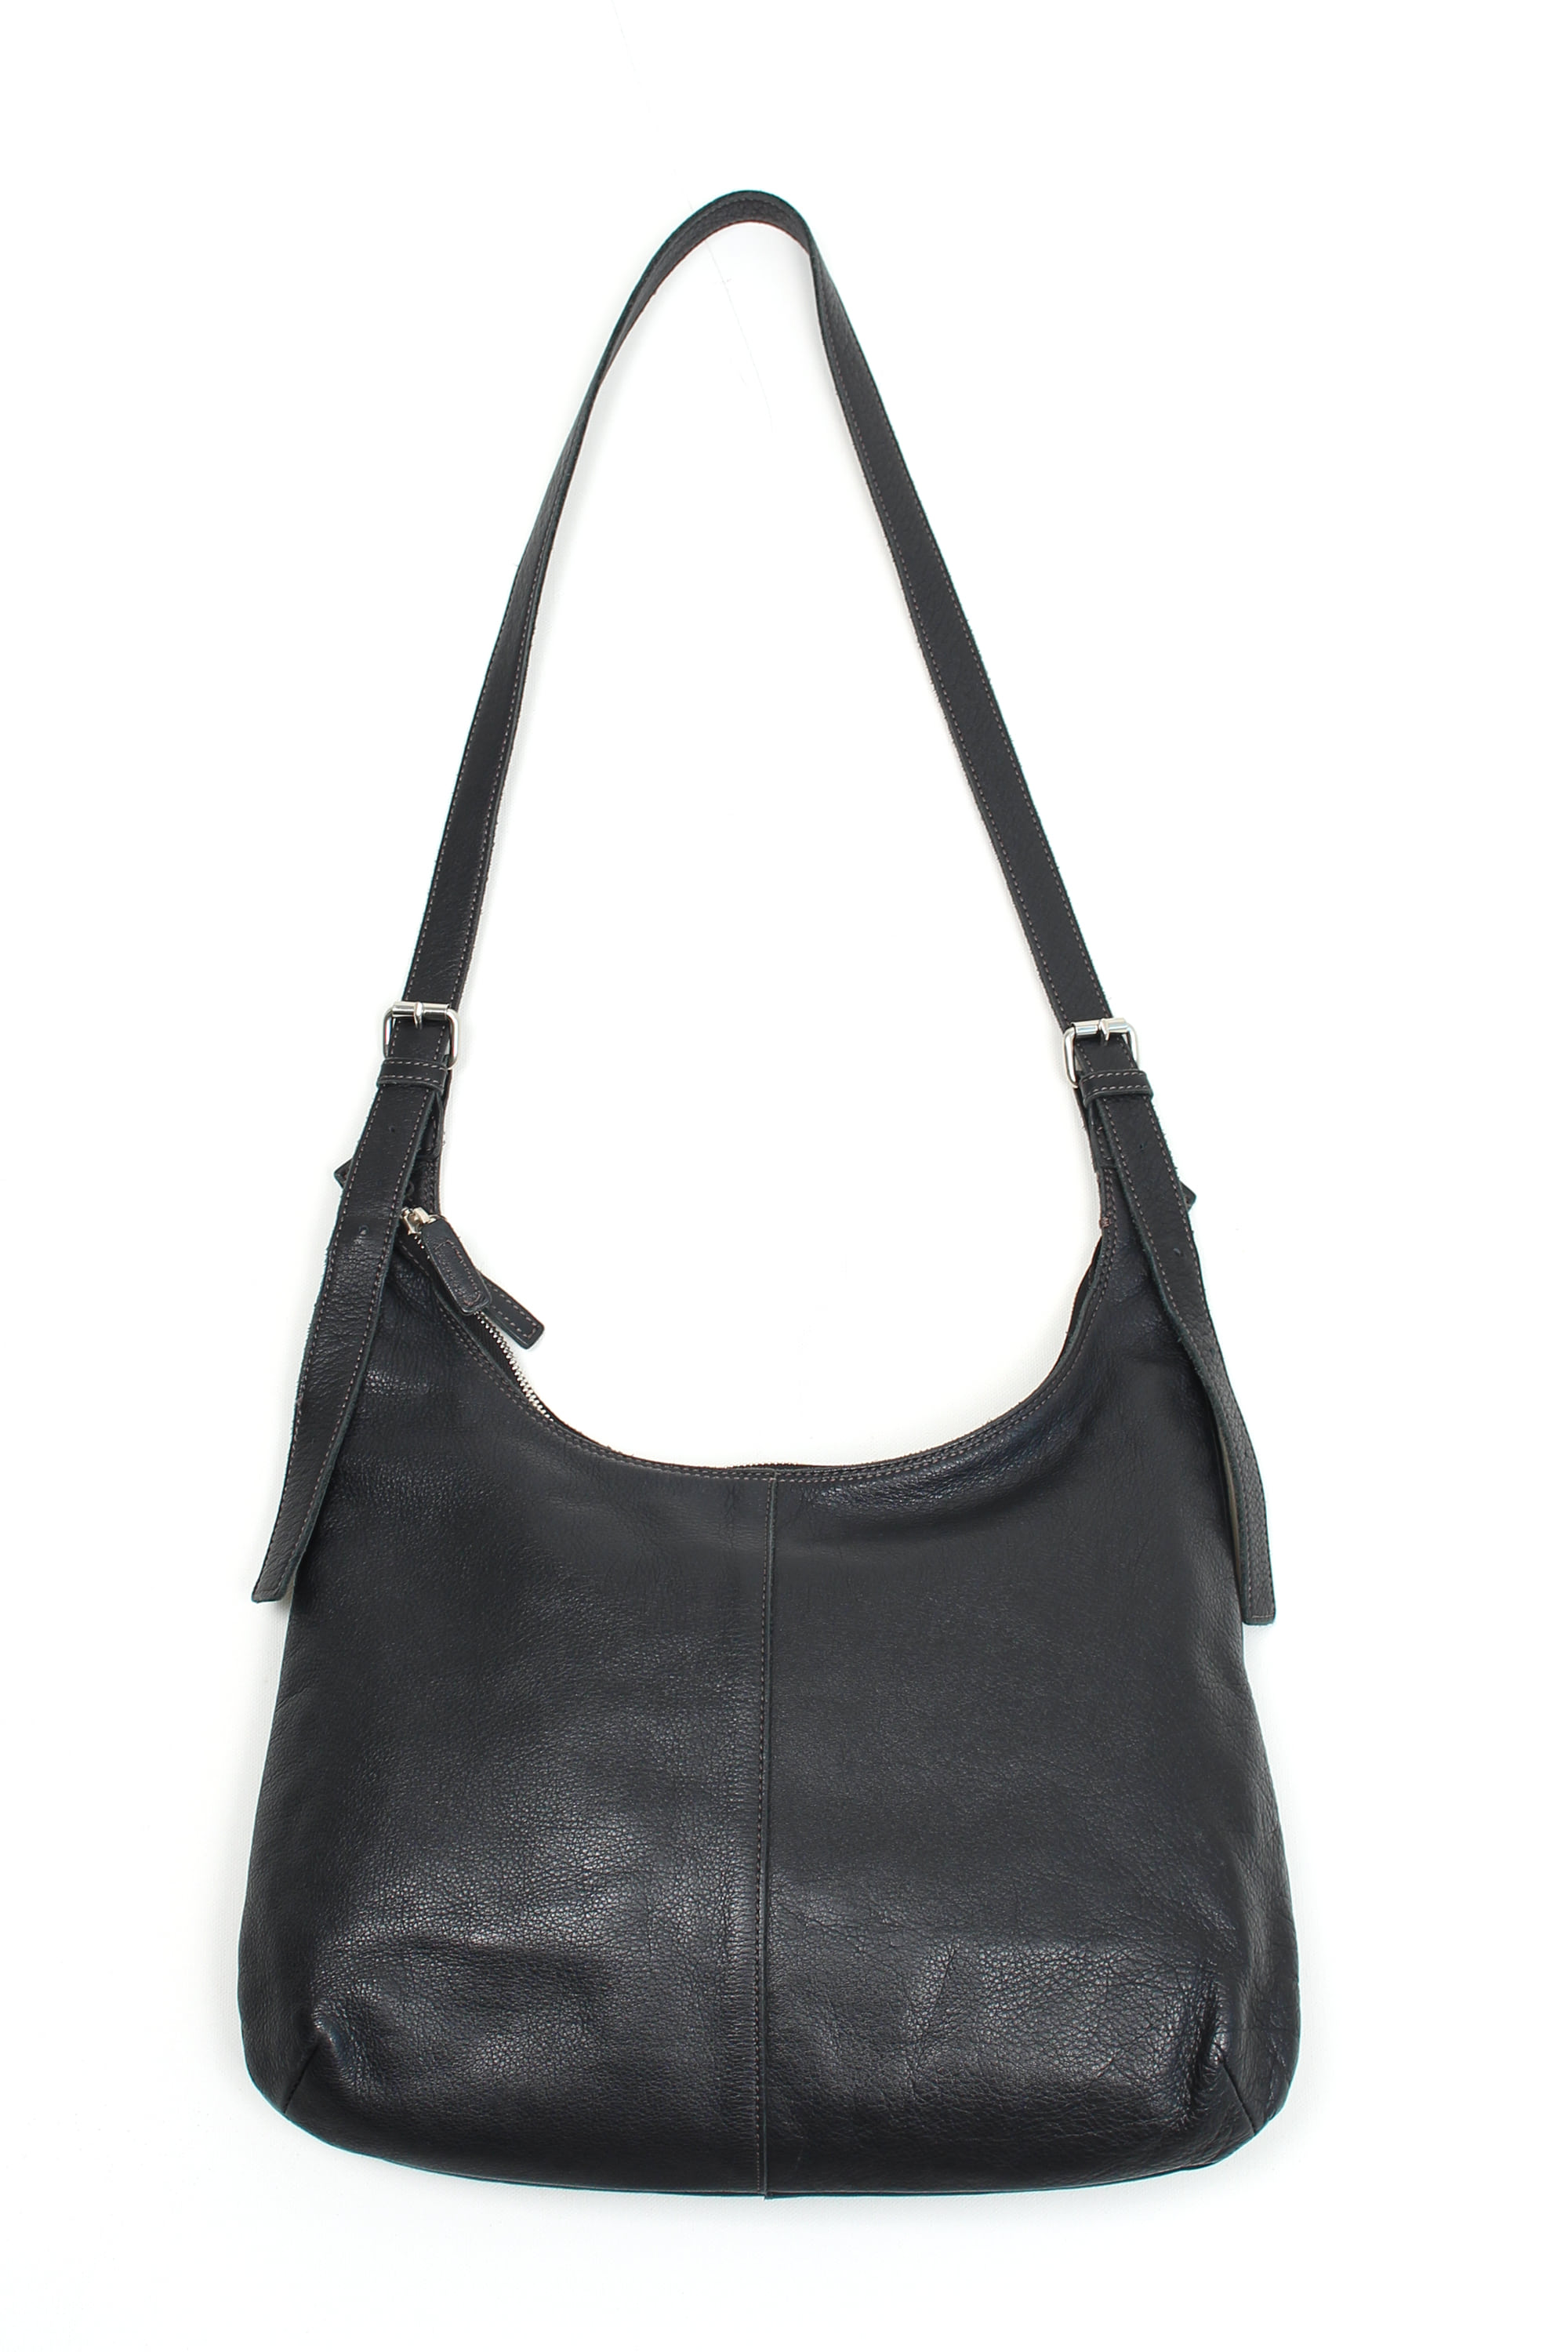 MARGARET HOWELL Idea Leather Bag